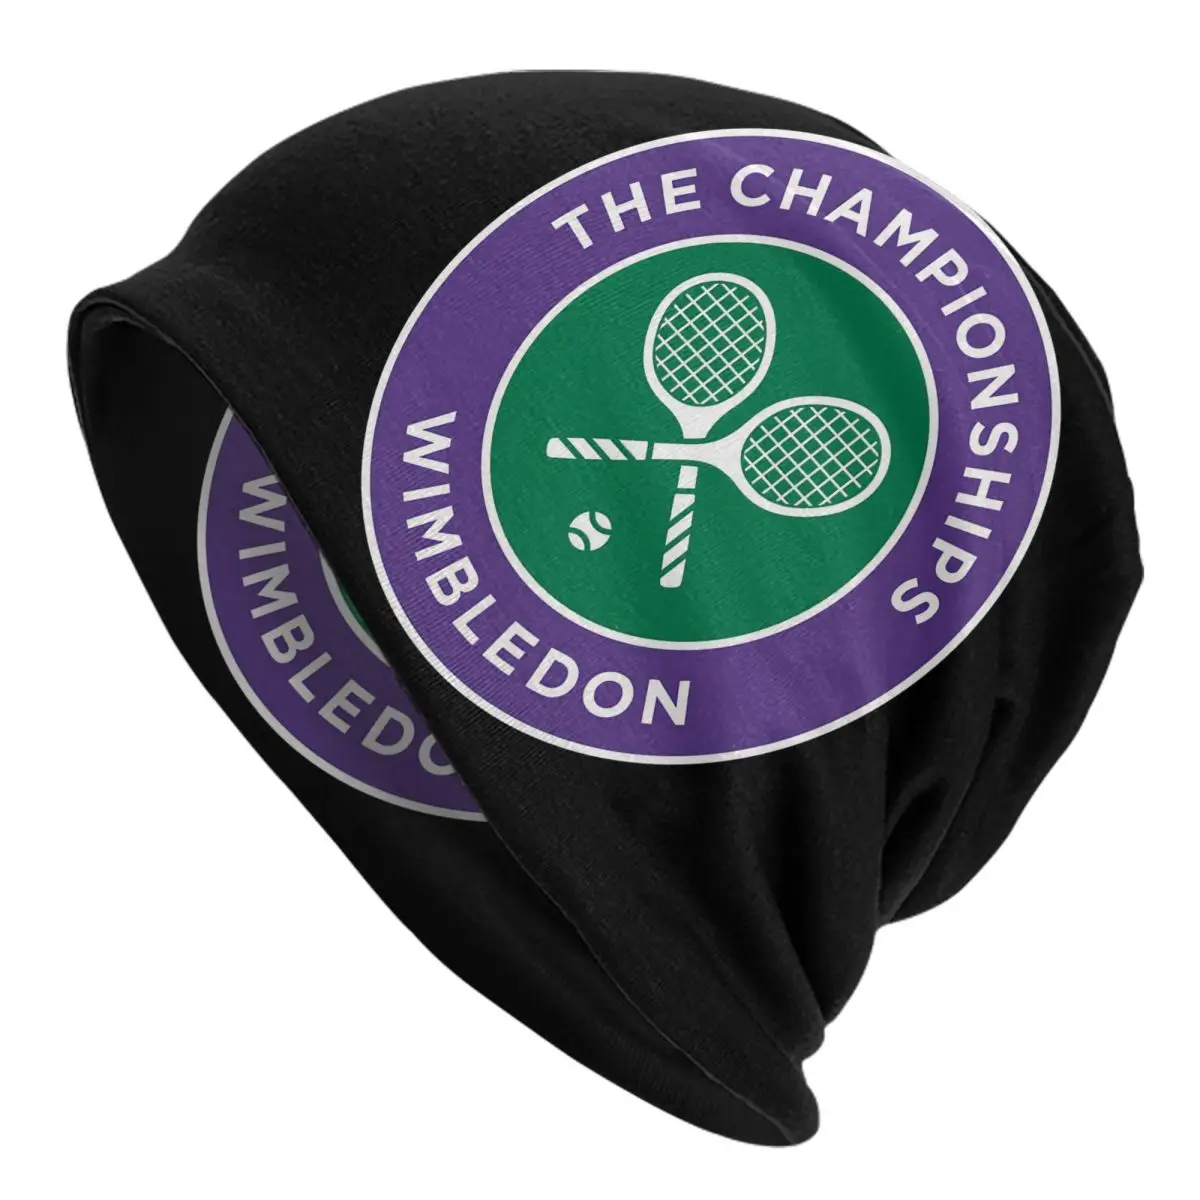 The Champions Wimbledon Caps Men Women Unisex Streetwear Winter Warm Knit Hat Adult funny Hats